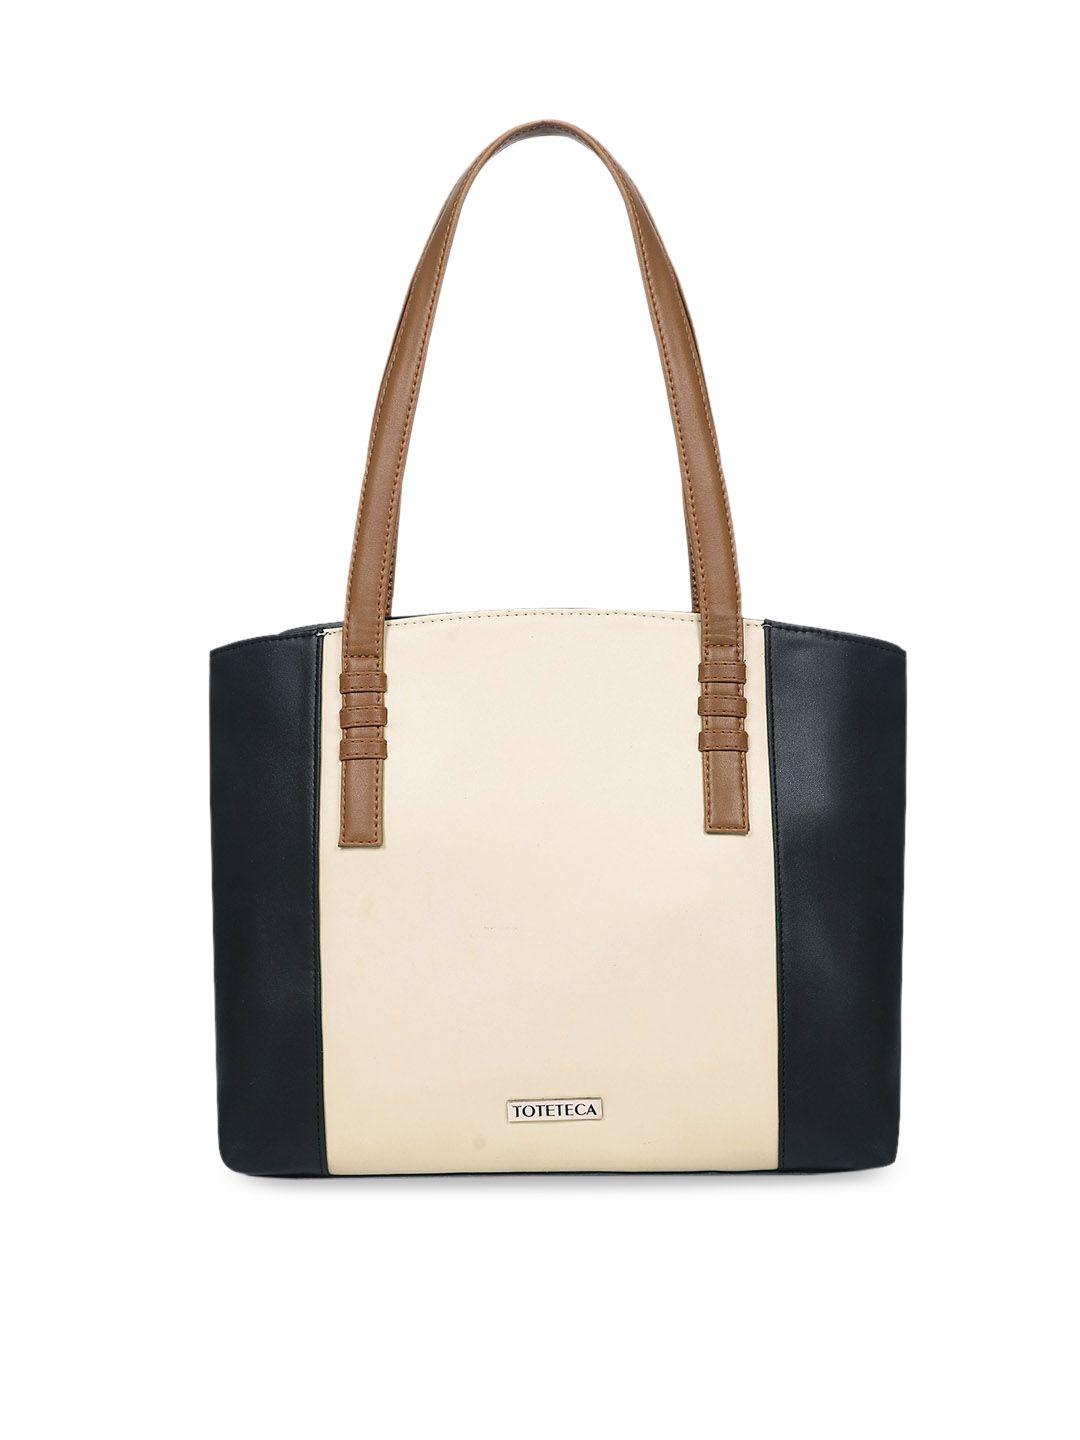 toteteca off-white & black colourblocked shoulder bag